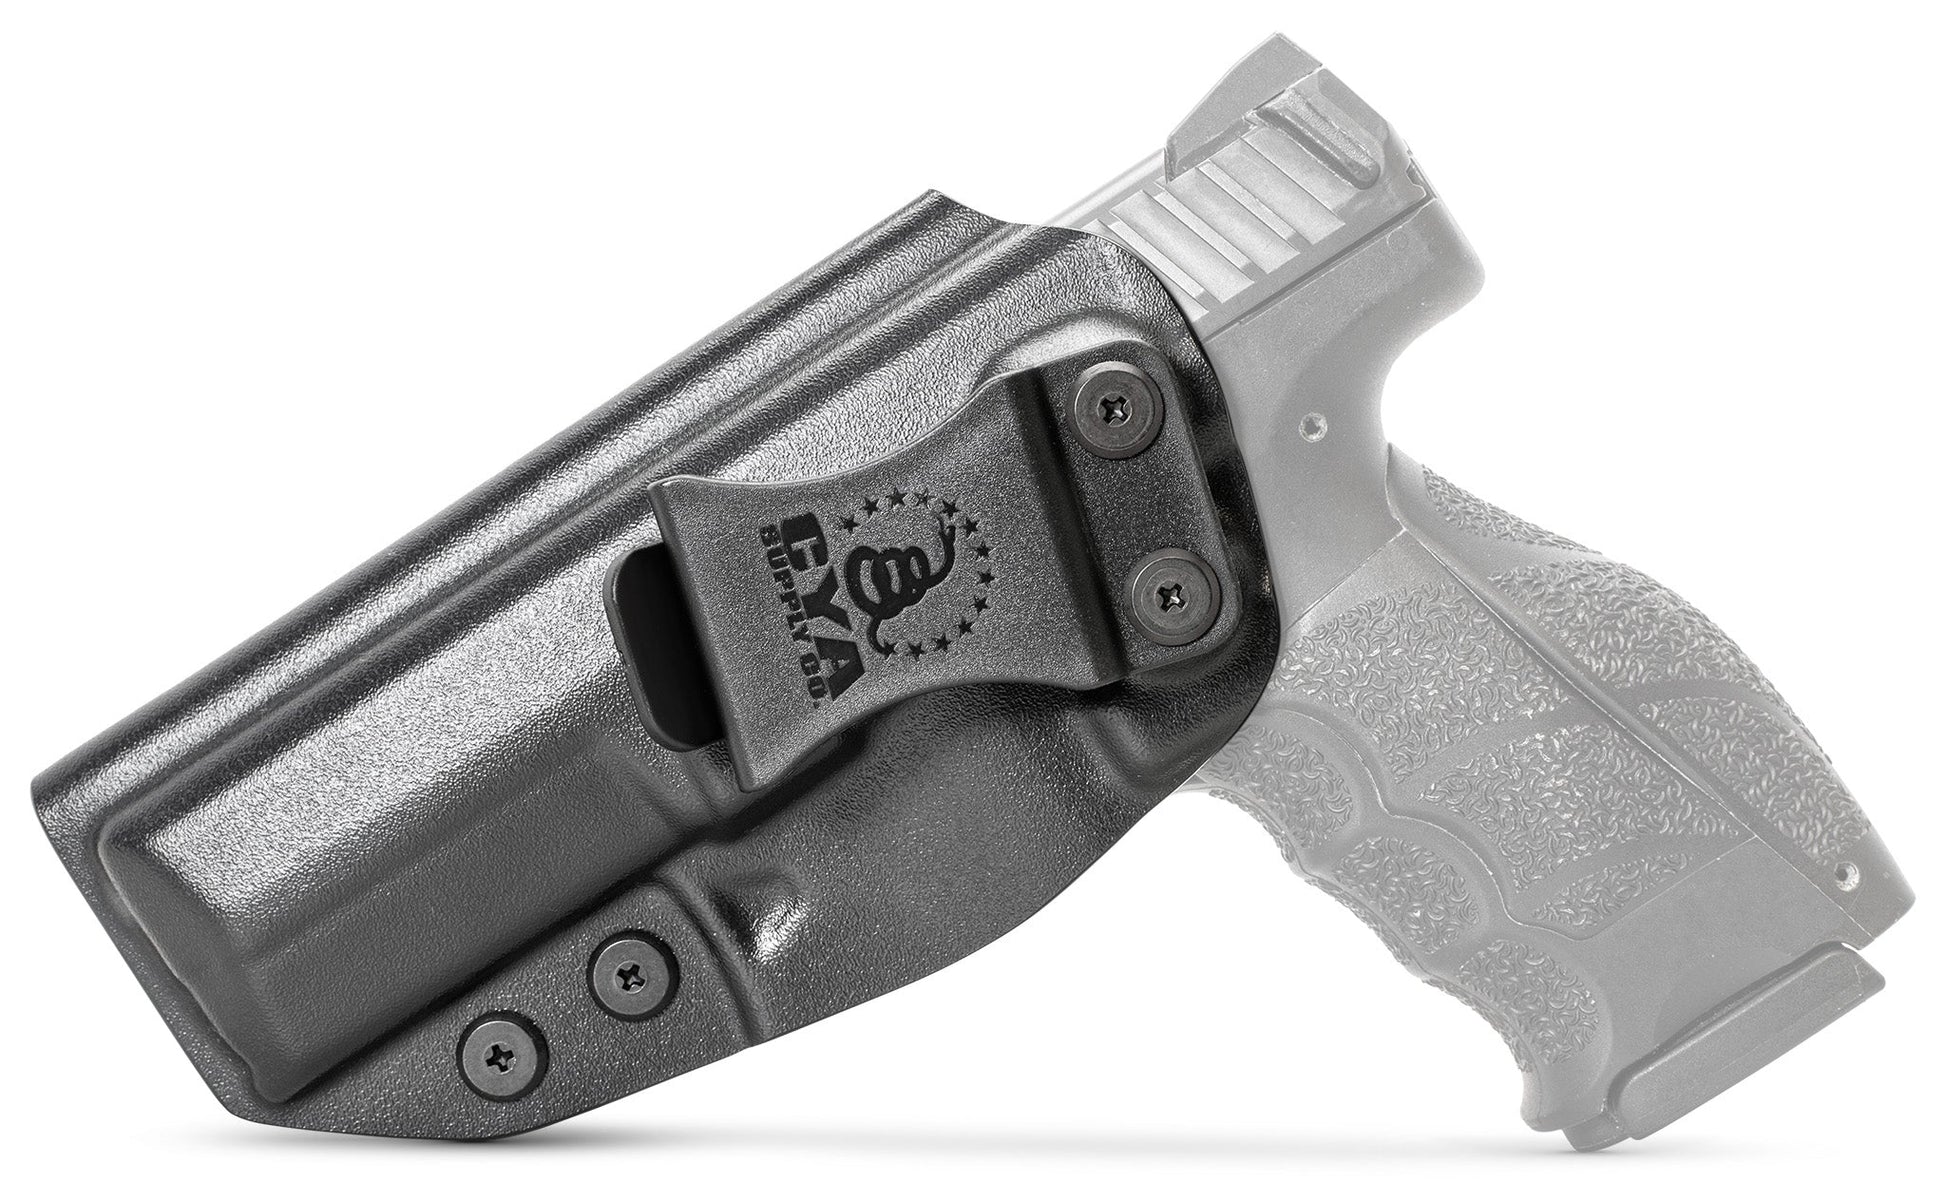 CYA black Base IWB holster with a black clip on a black hk vp9 handgun